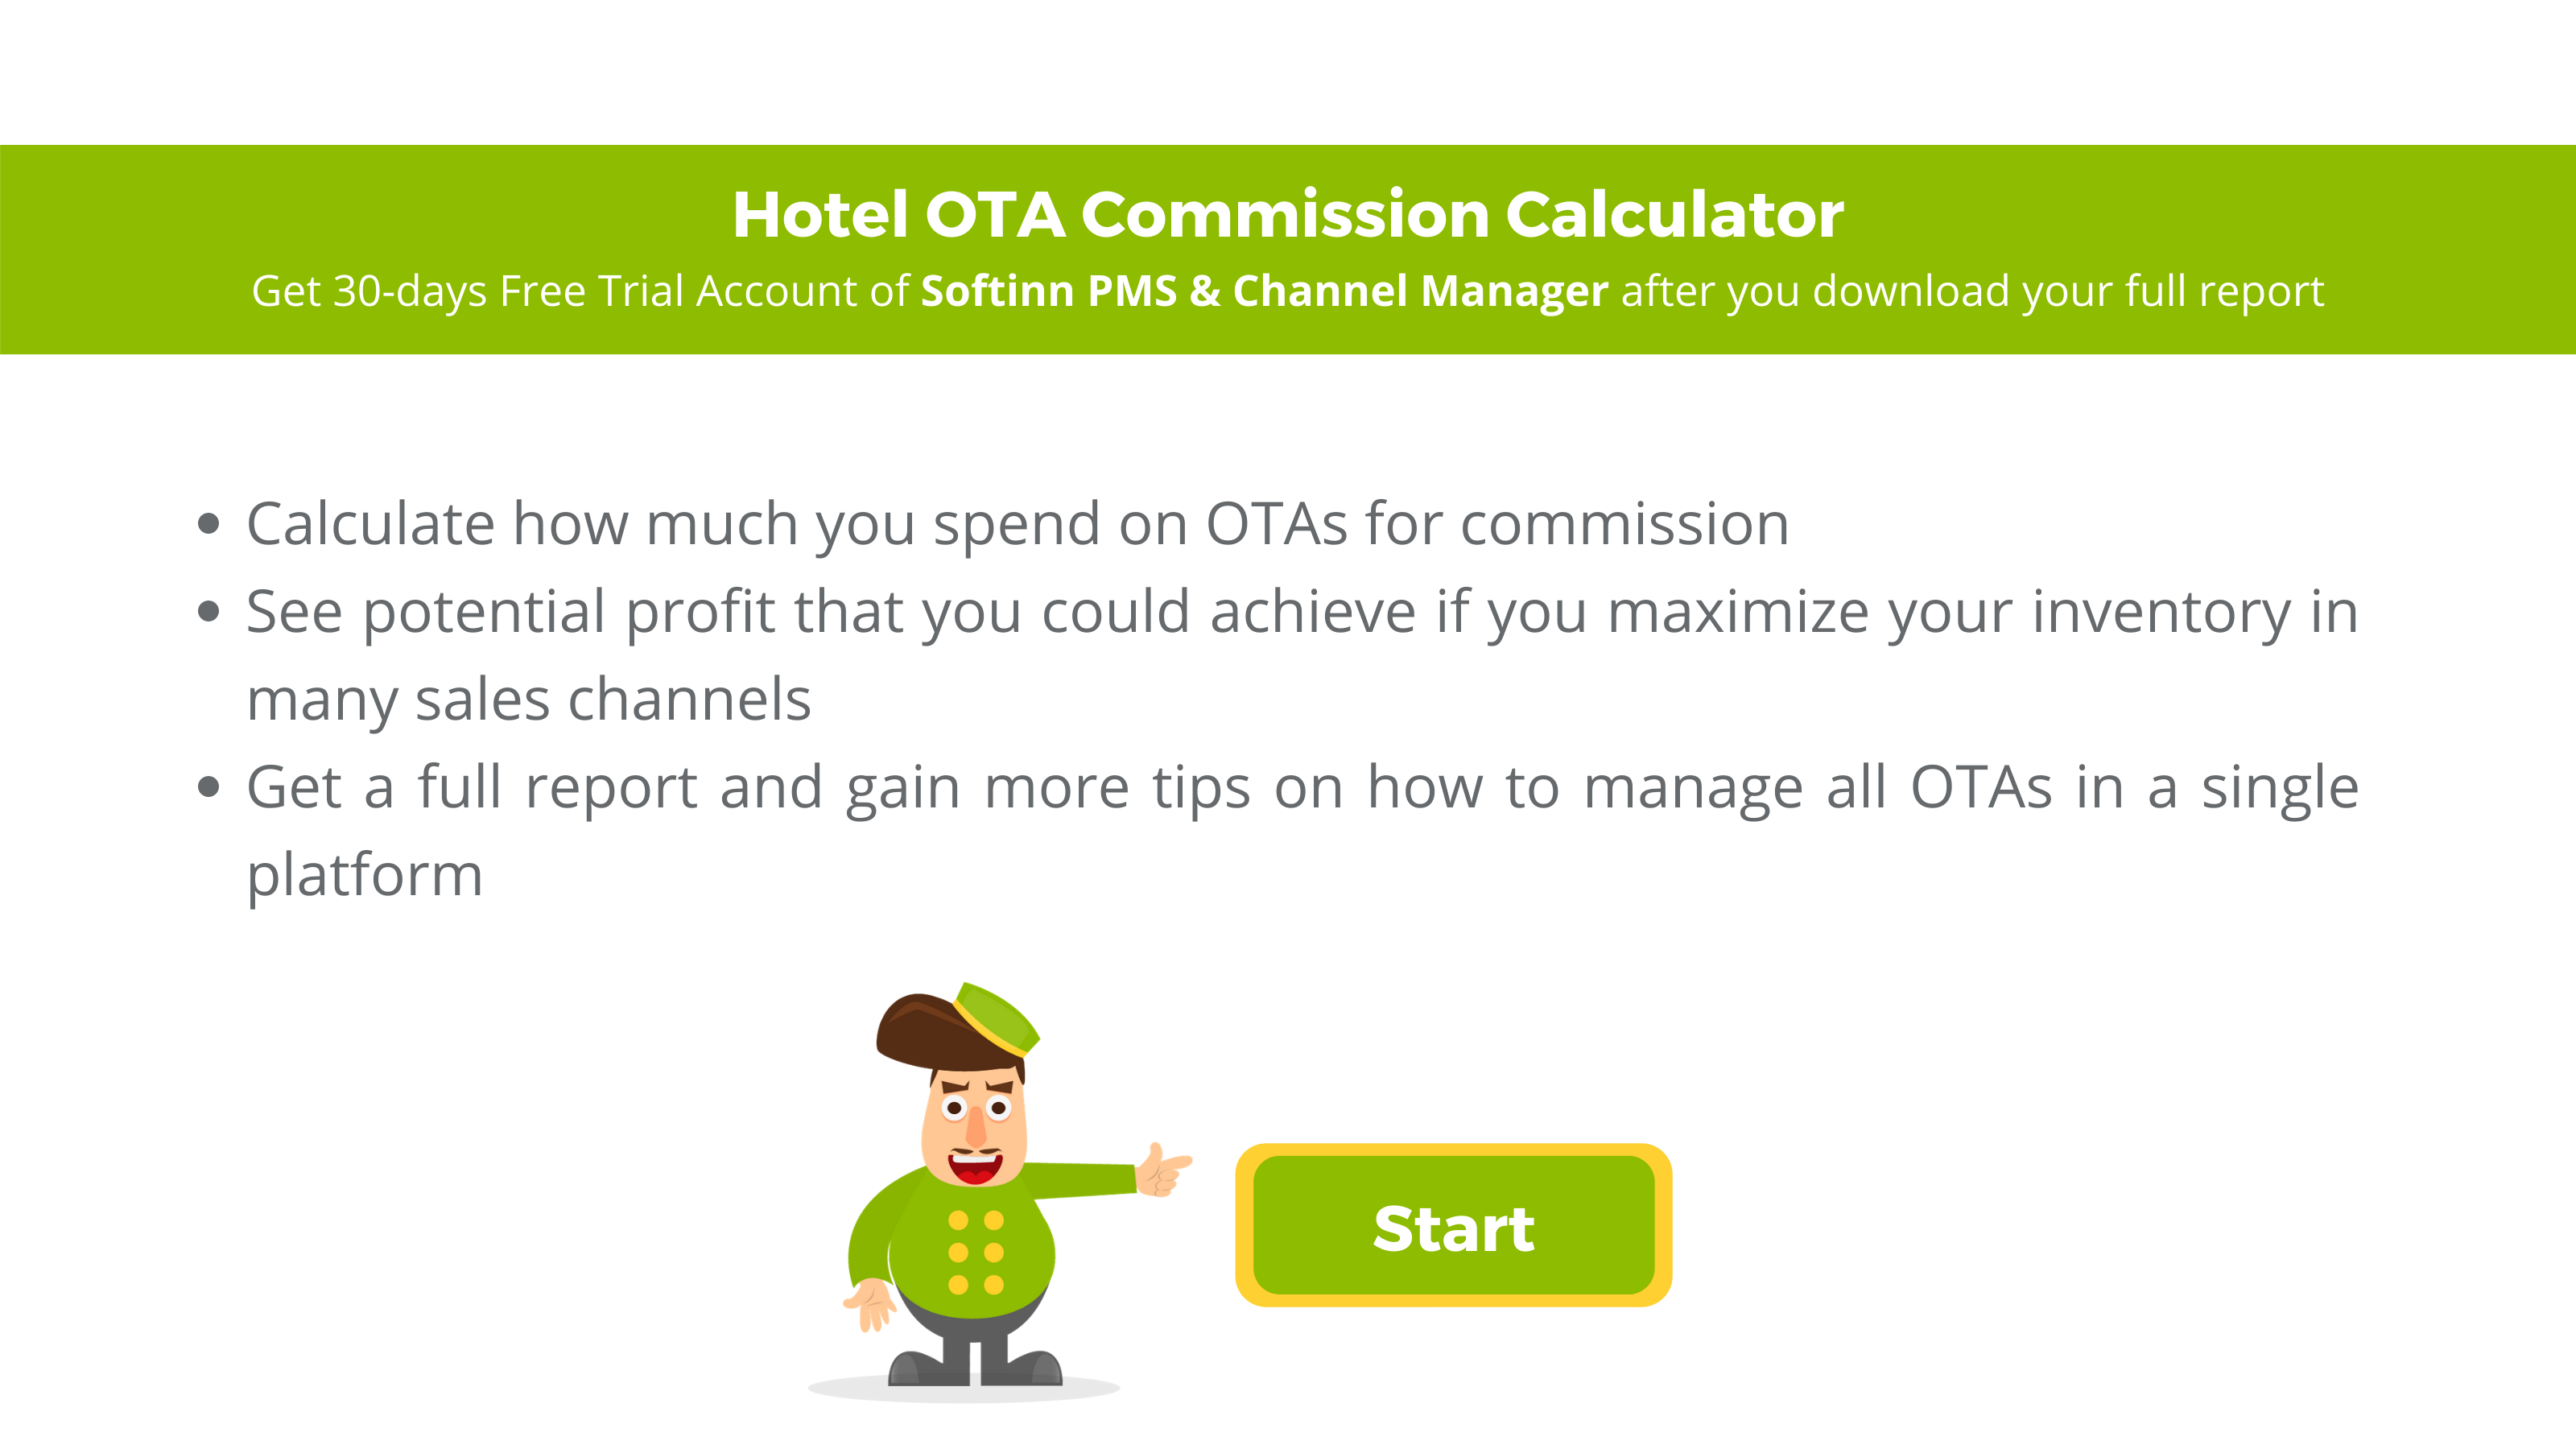 Hotel OTA Commission Calculator